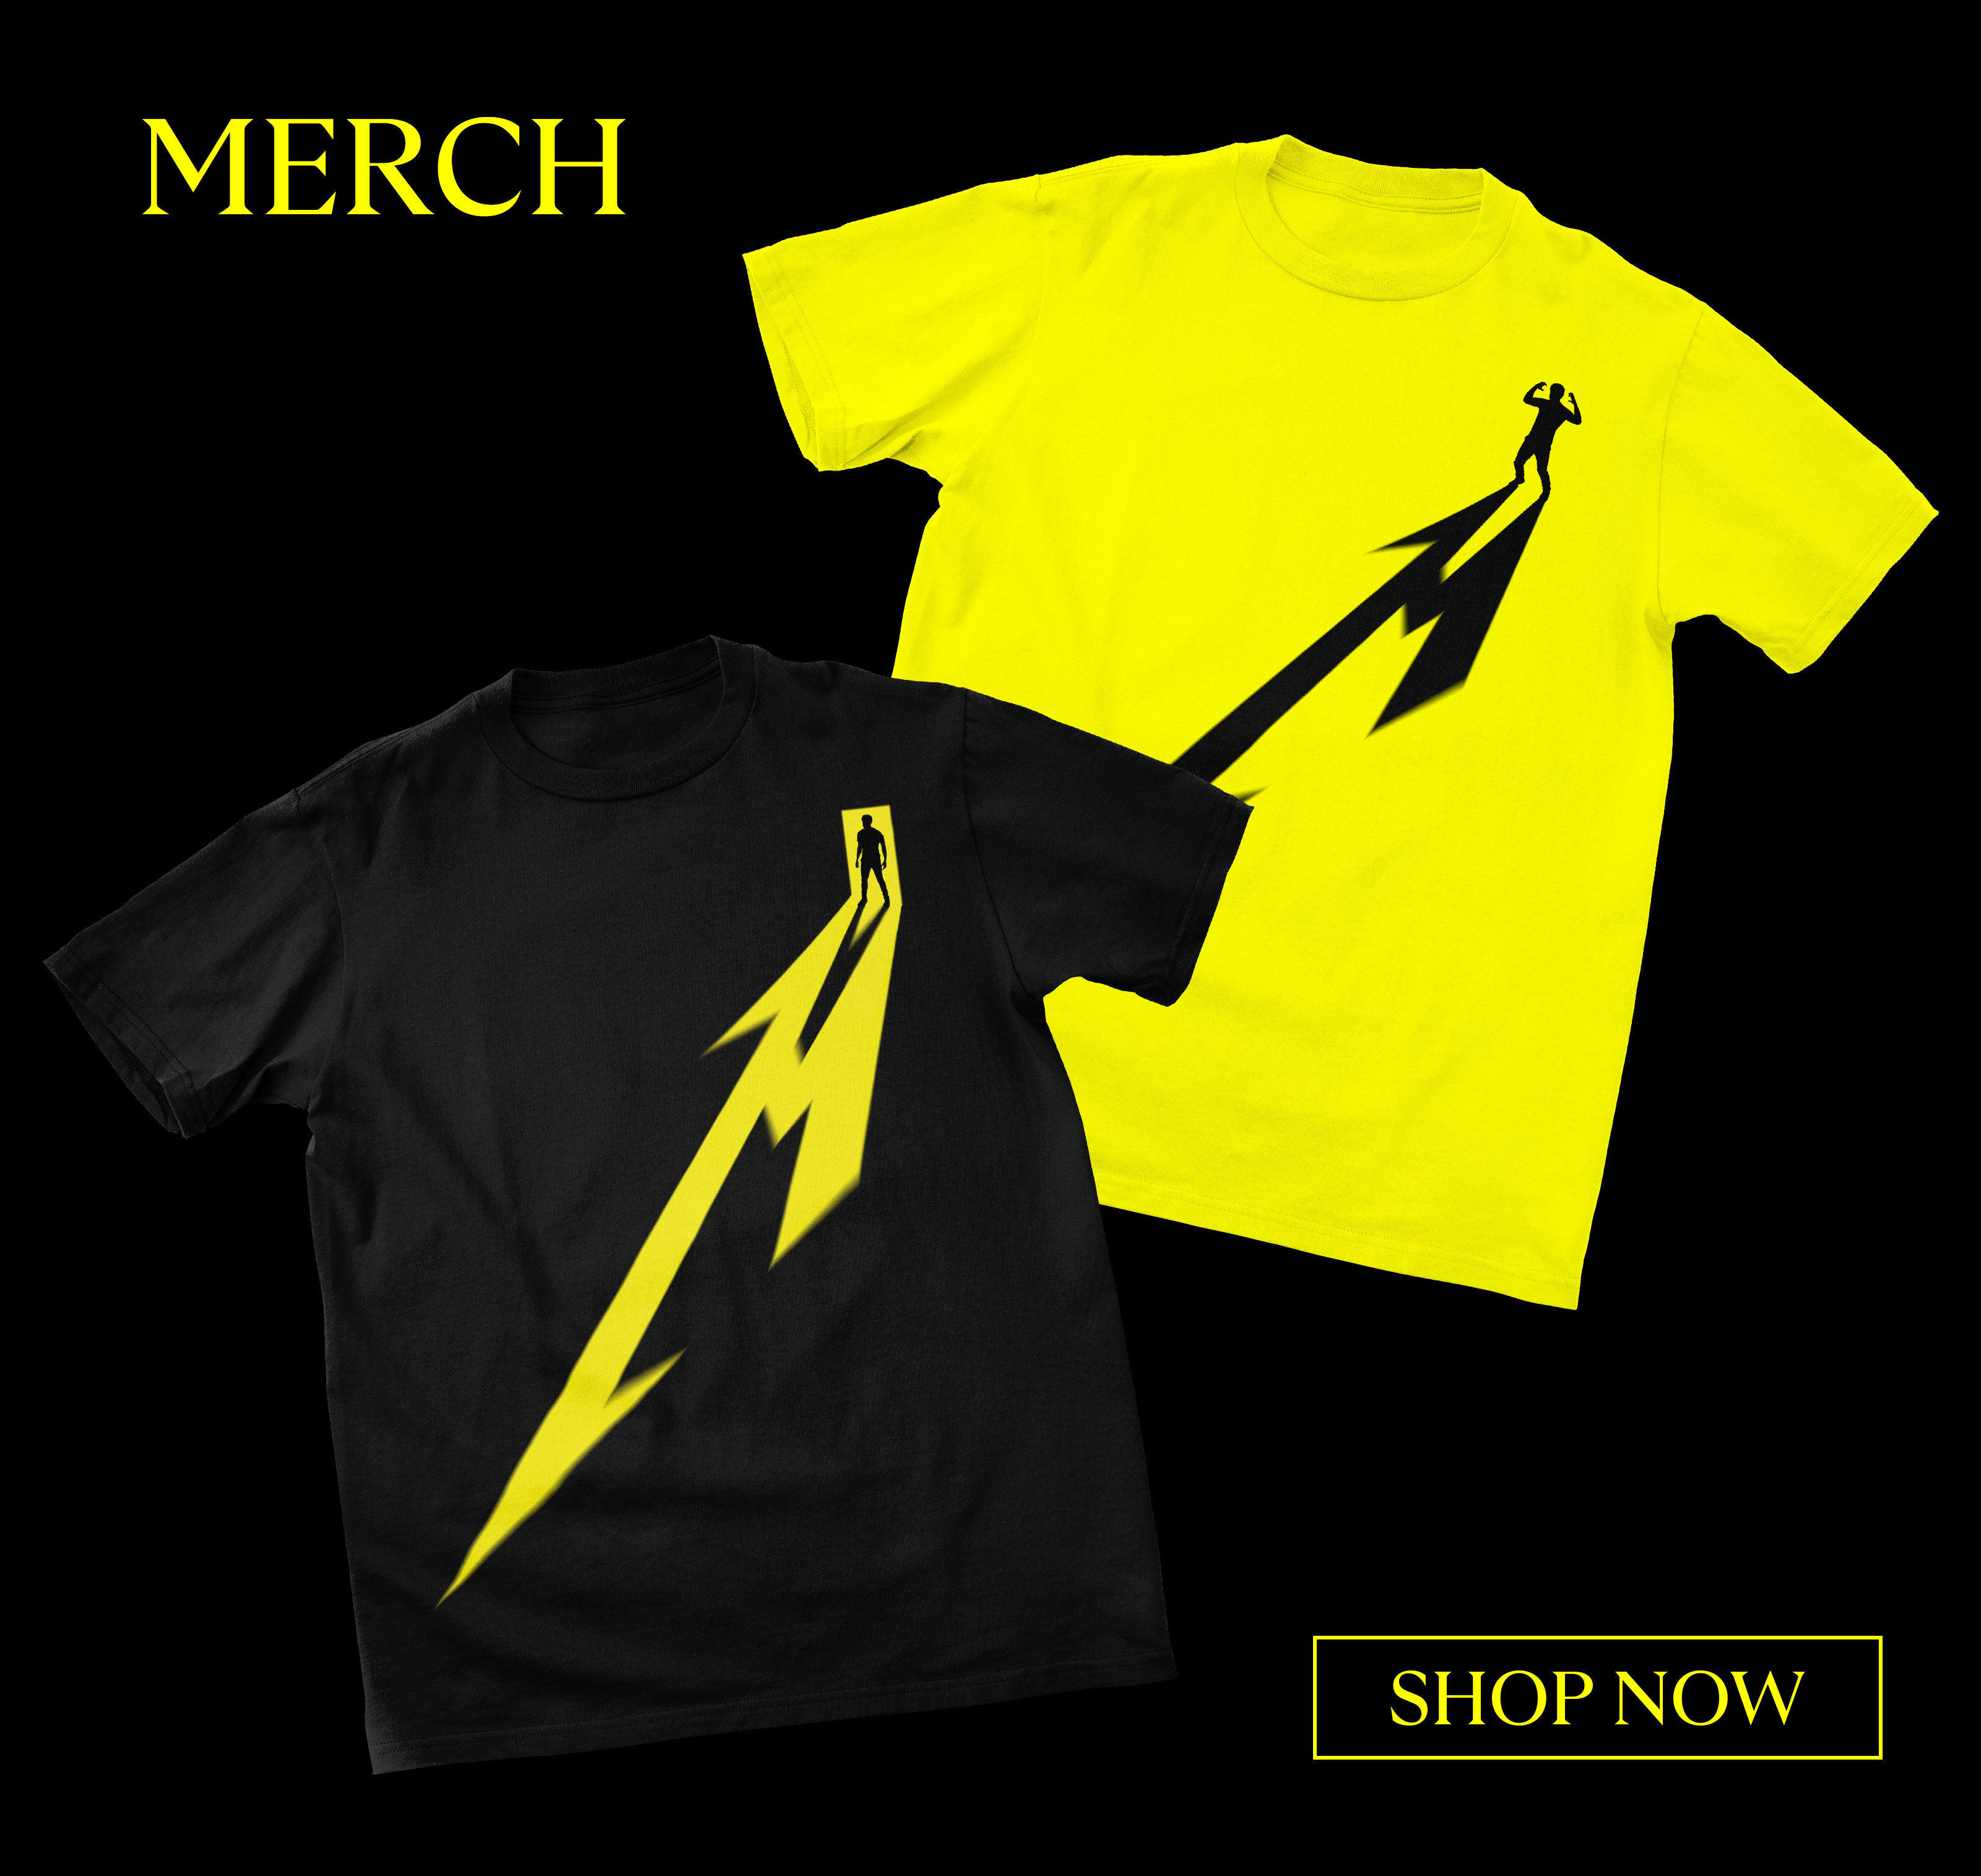 Yellow background. "Merch" written sideways. Black Tshirt with yellow, stylized "72". "Show Now" button.